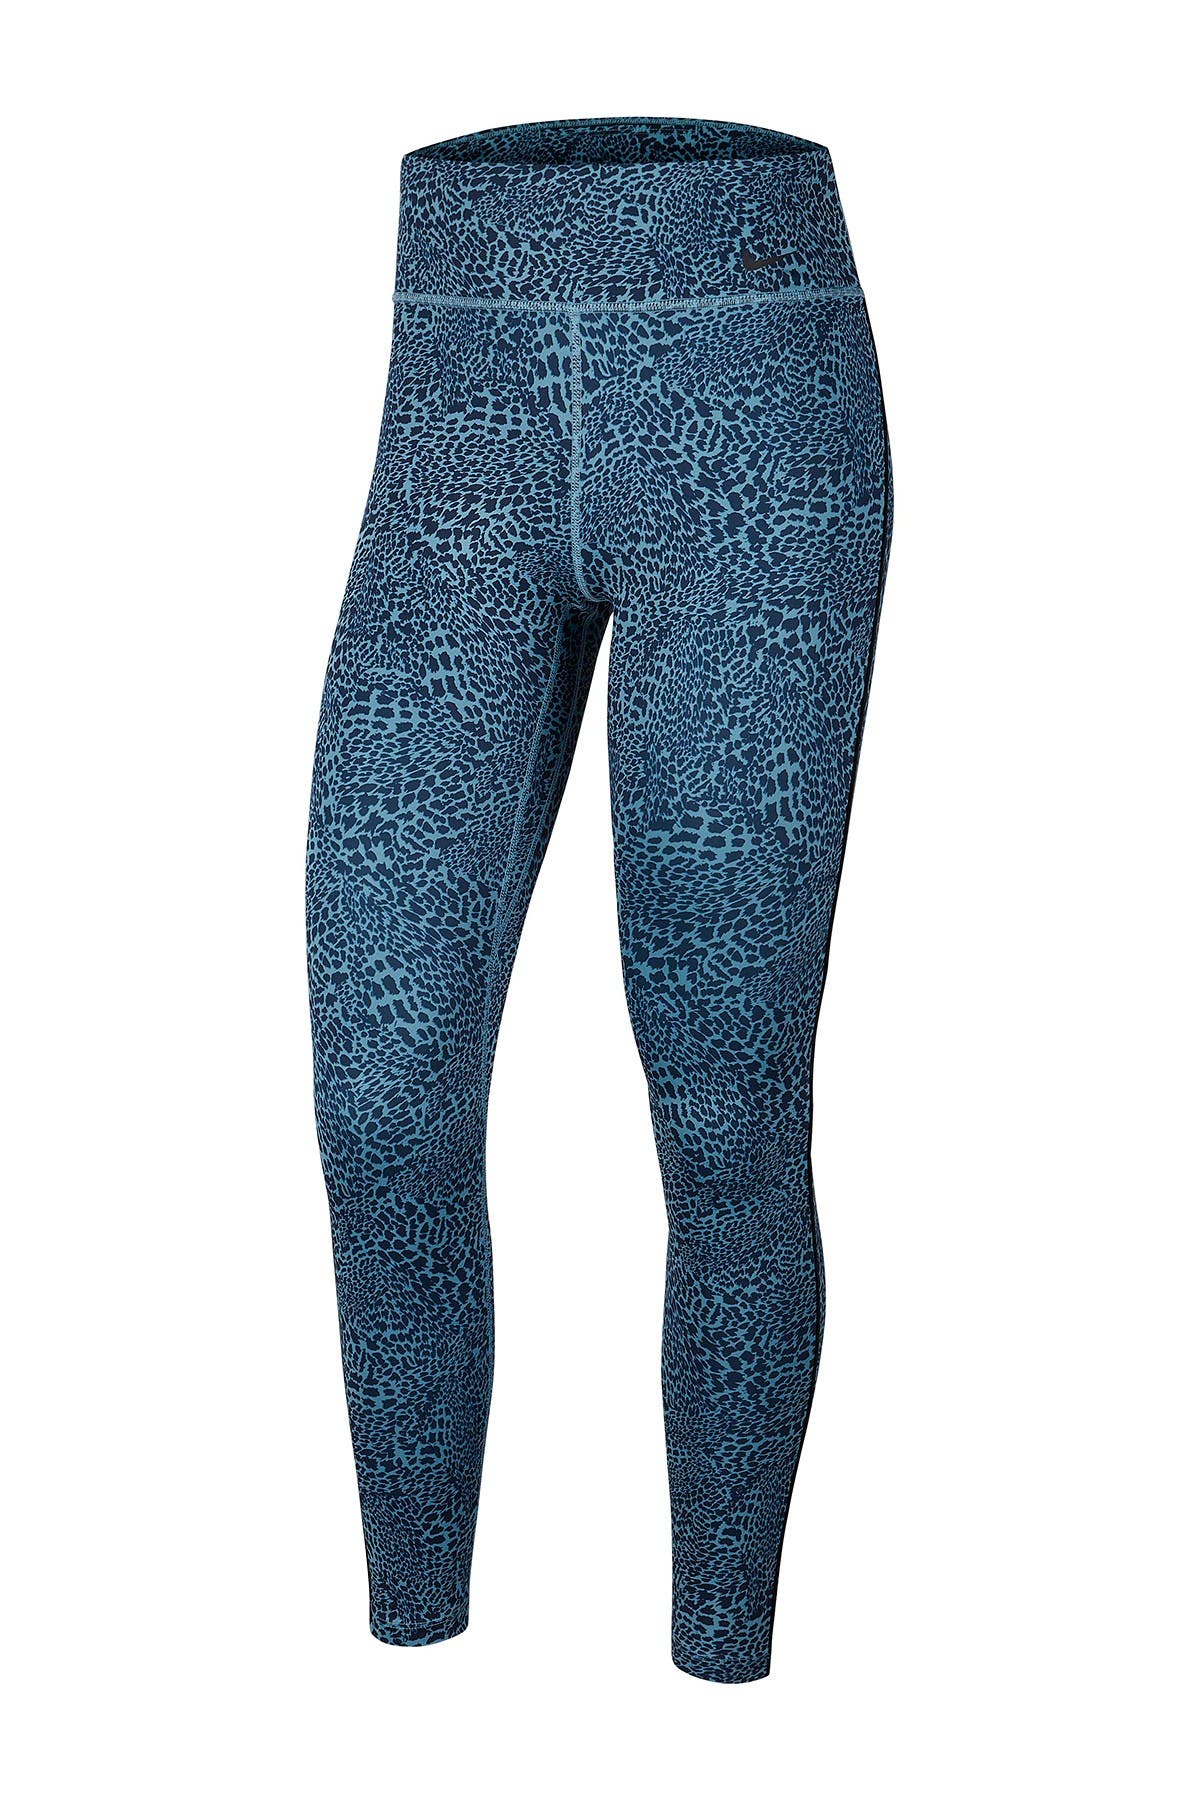 nike blue leopard print leggings